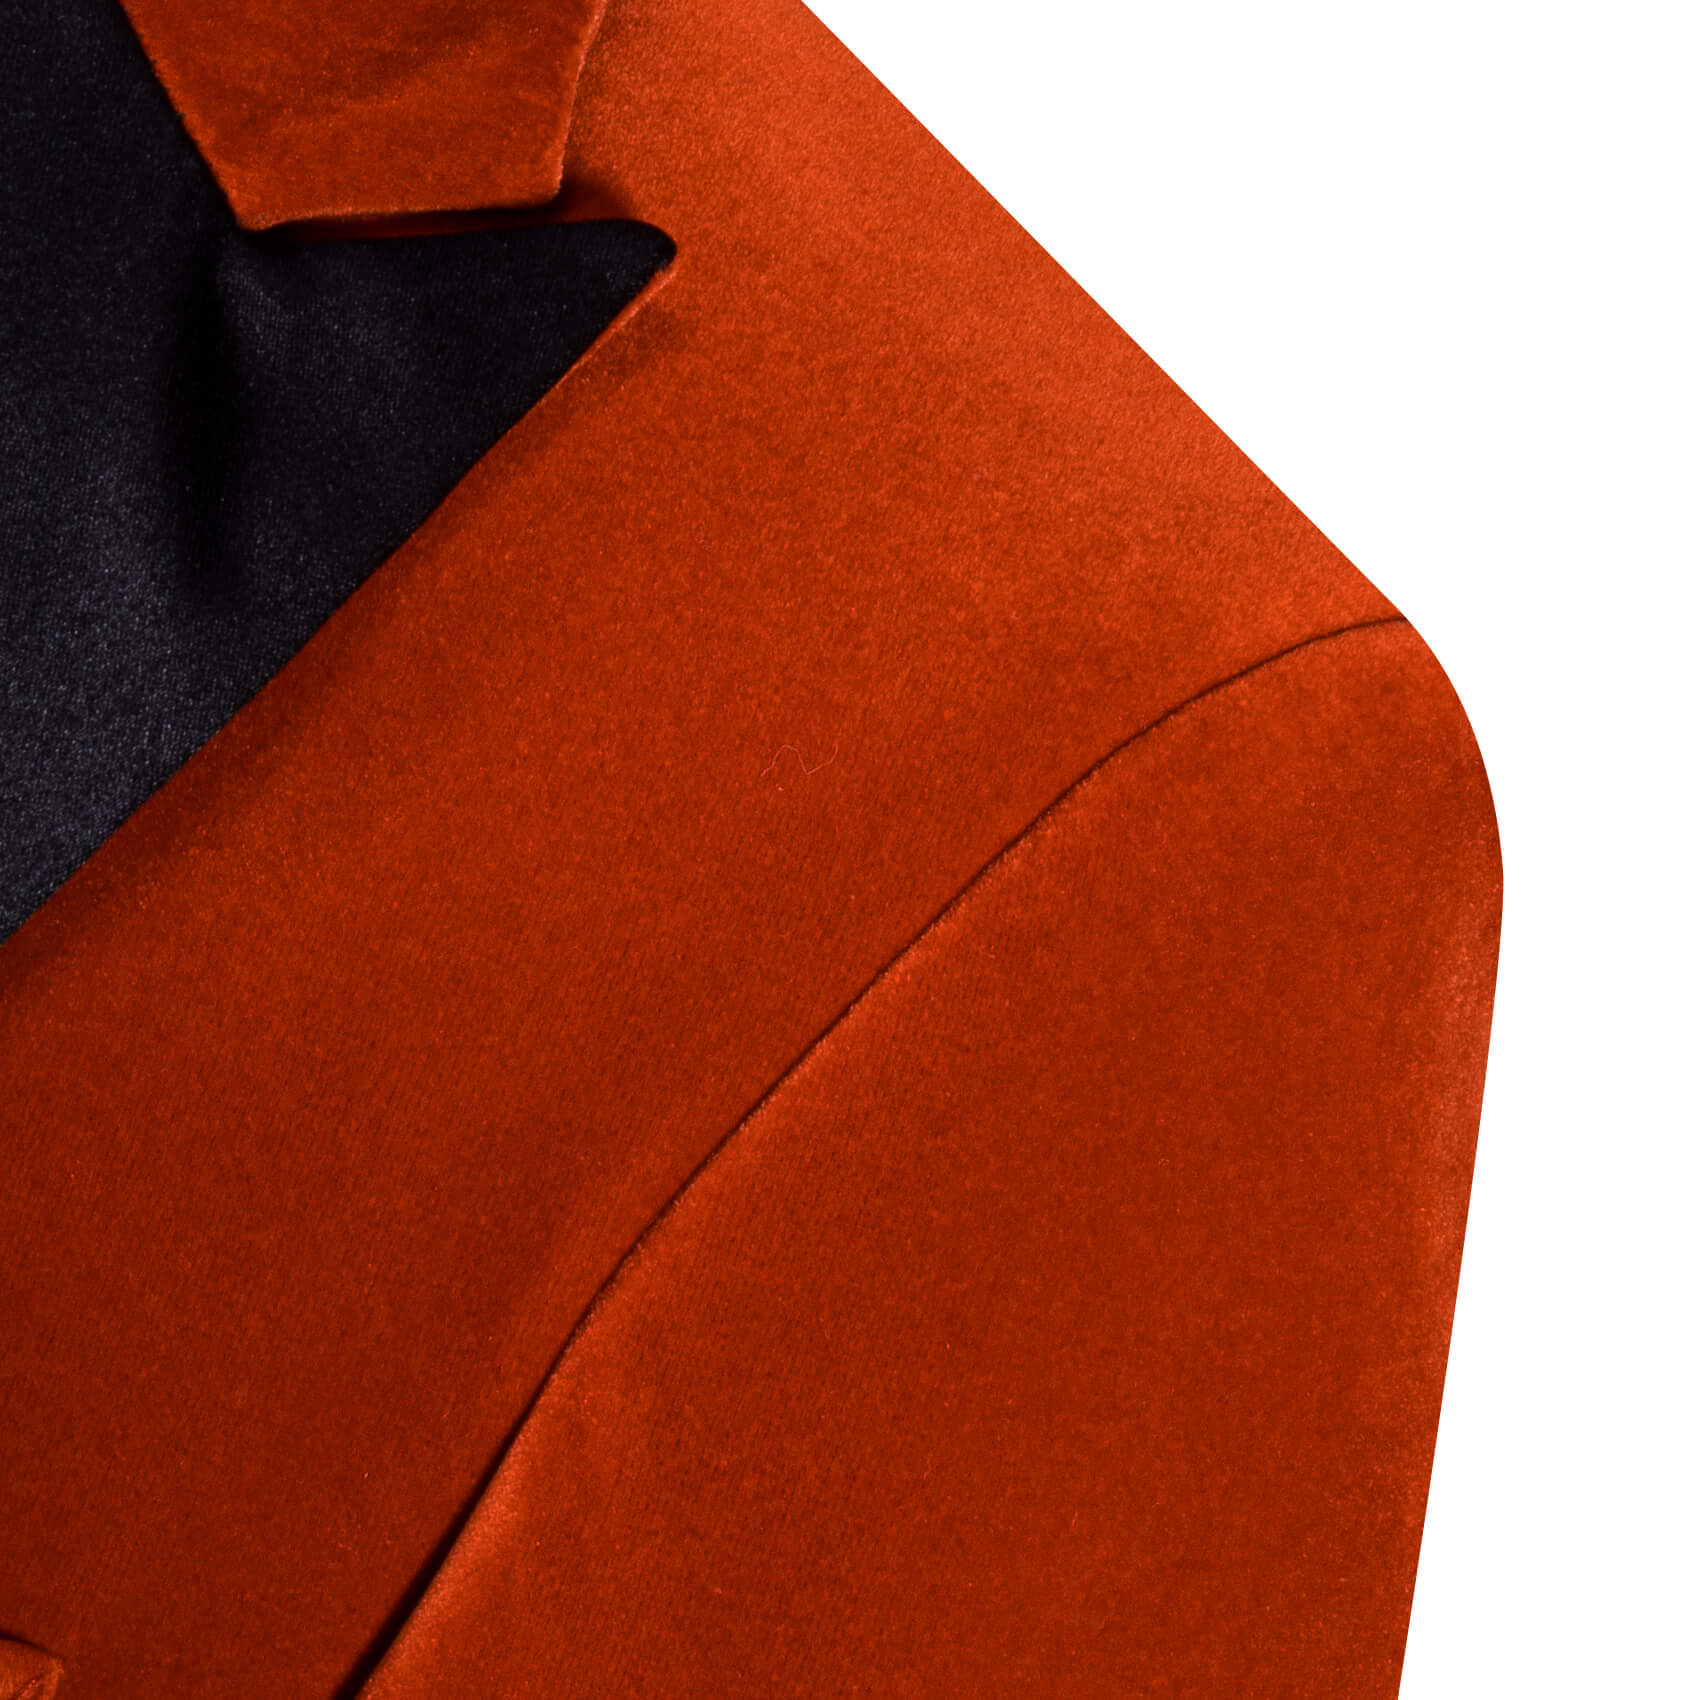 Barry.wang Peak Collar Suit Burnt Orange Solid Slim Silk Suit for Men